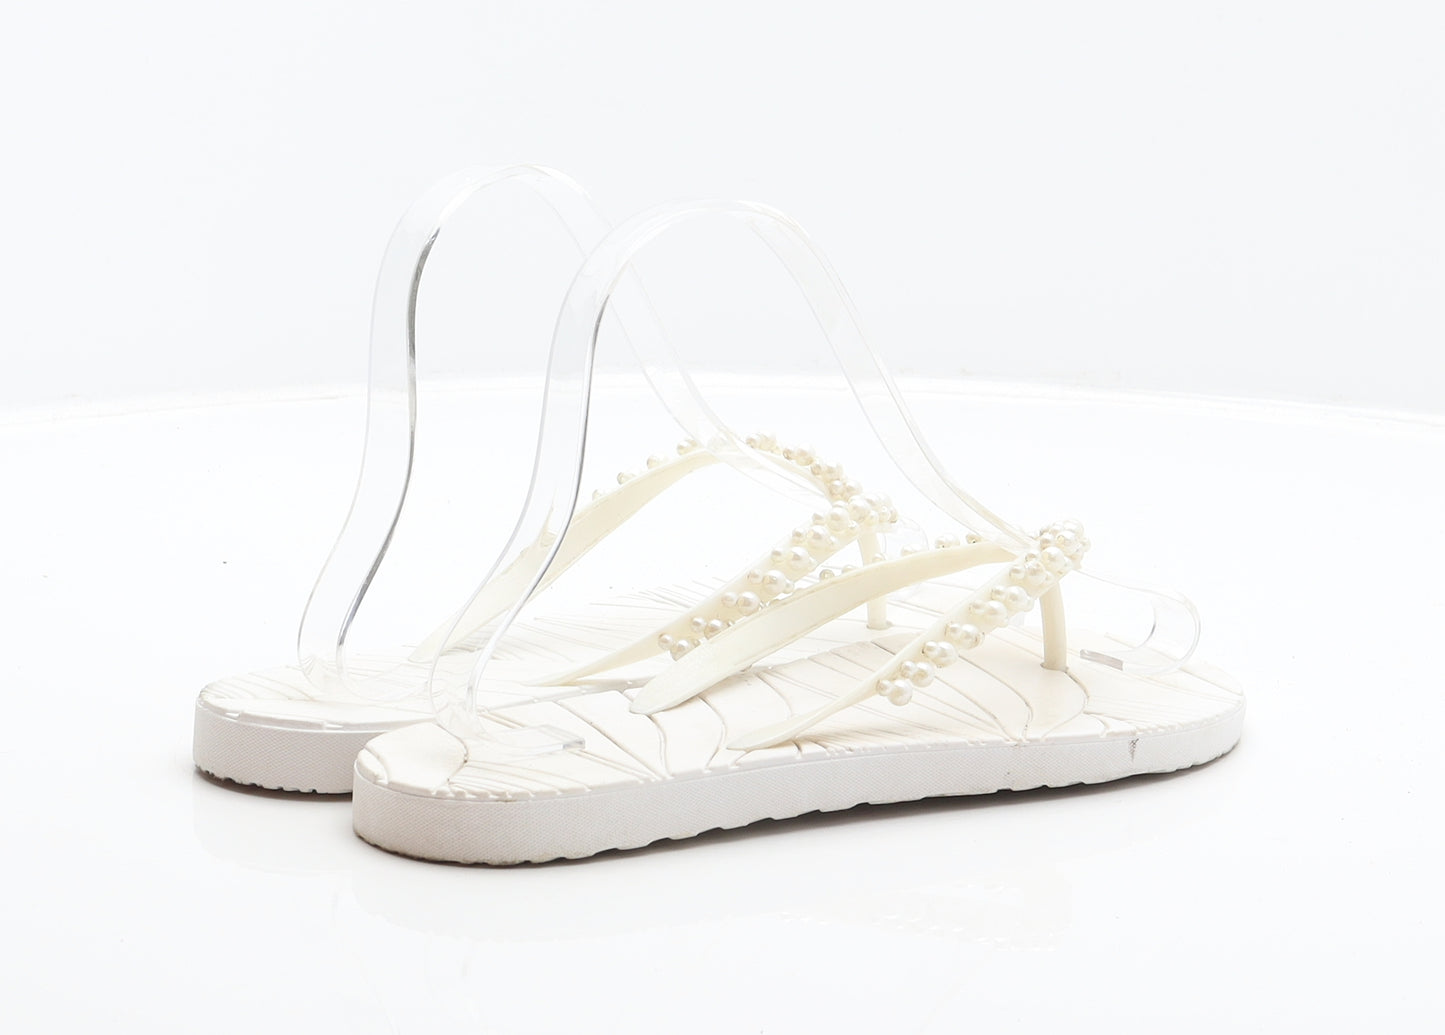 Preworn Womens White Synthetic Thong Sandal UK 5 38 - Pearl detail